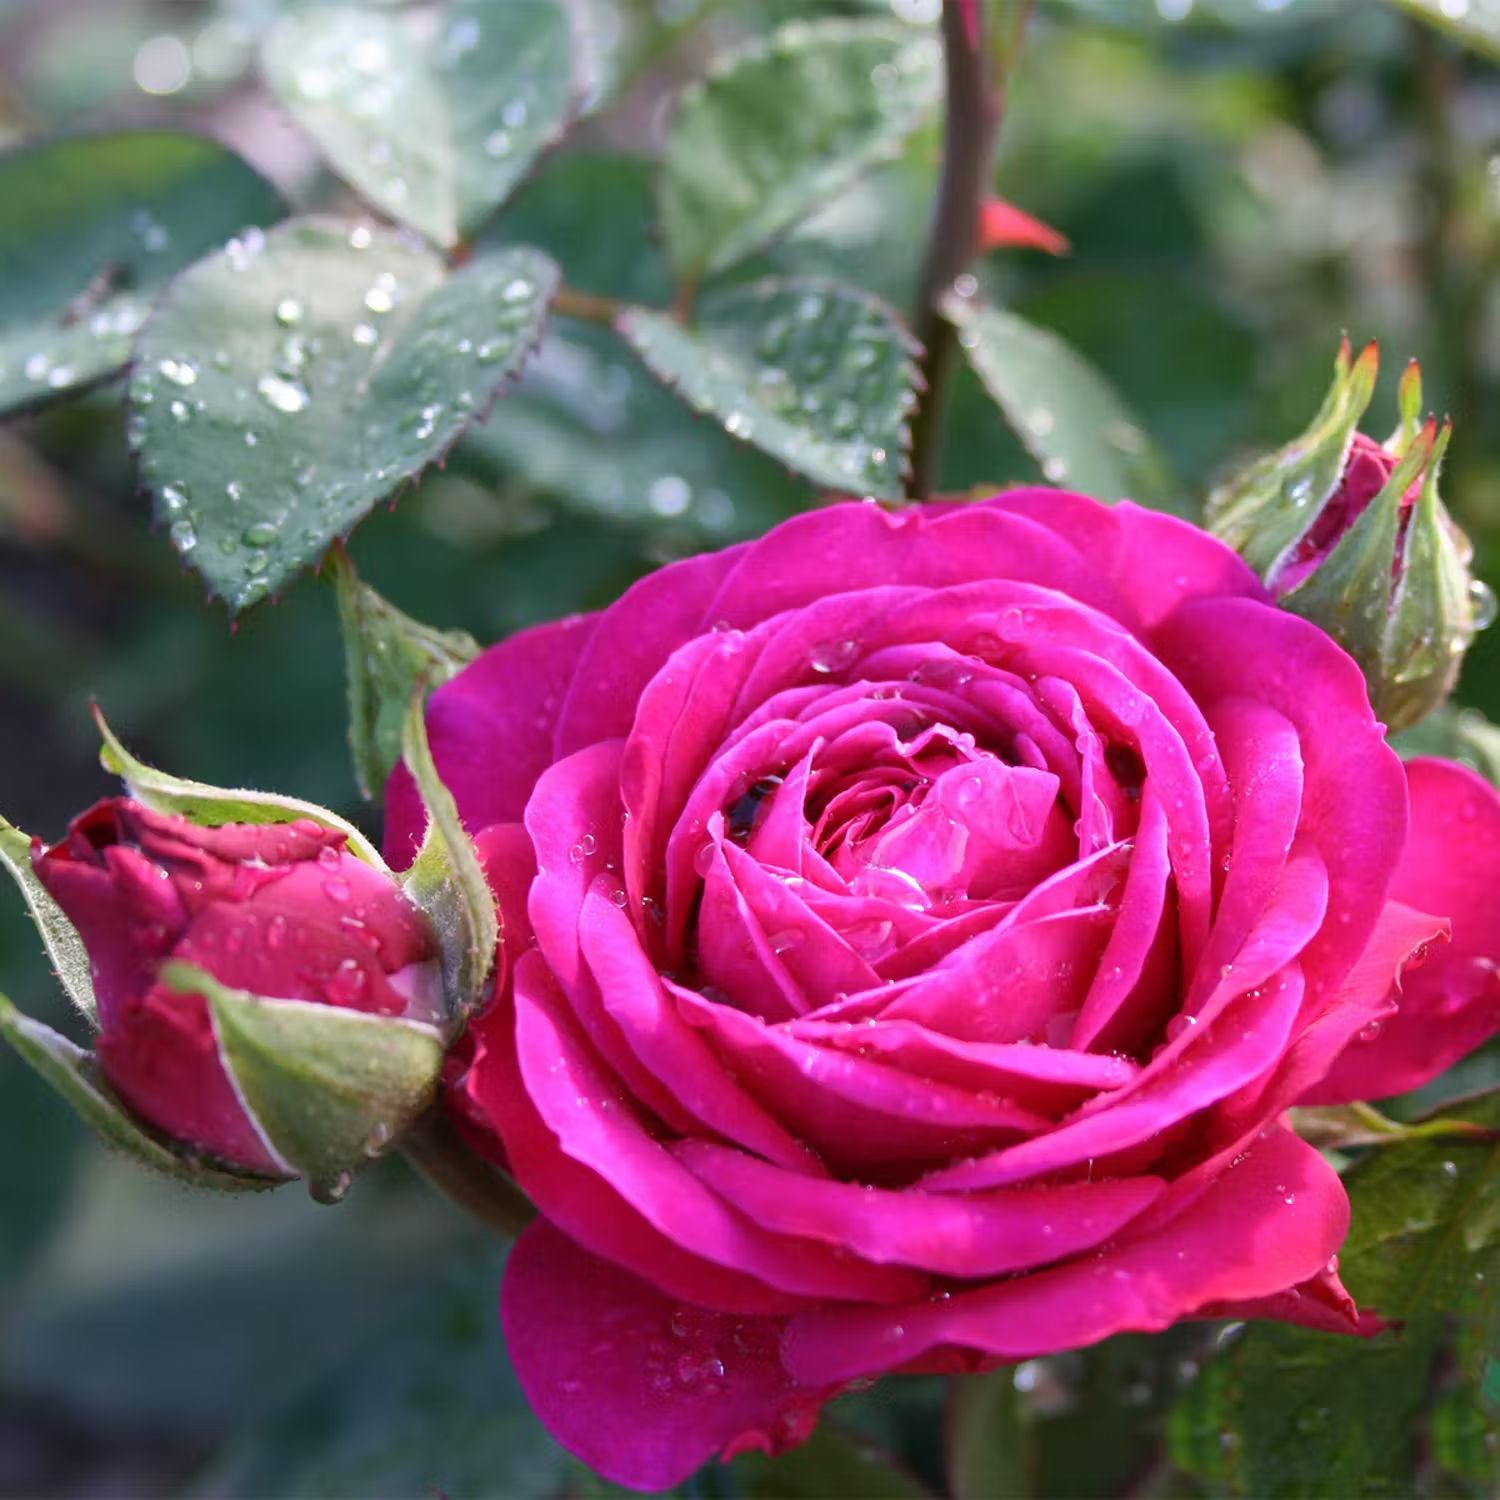 Plantera ros i kruka - Rosa Rabattros Heidi Klum